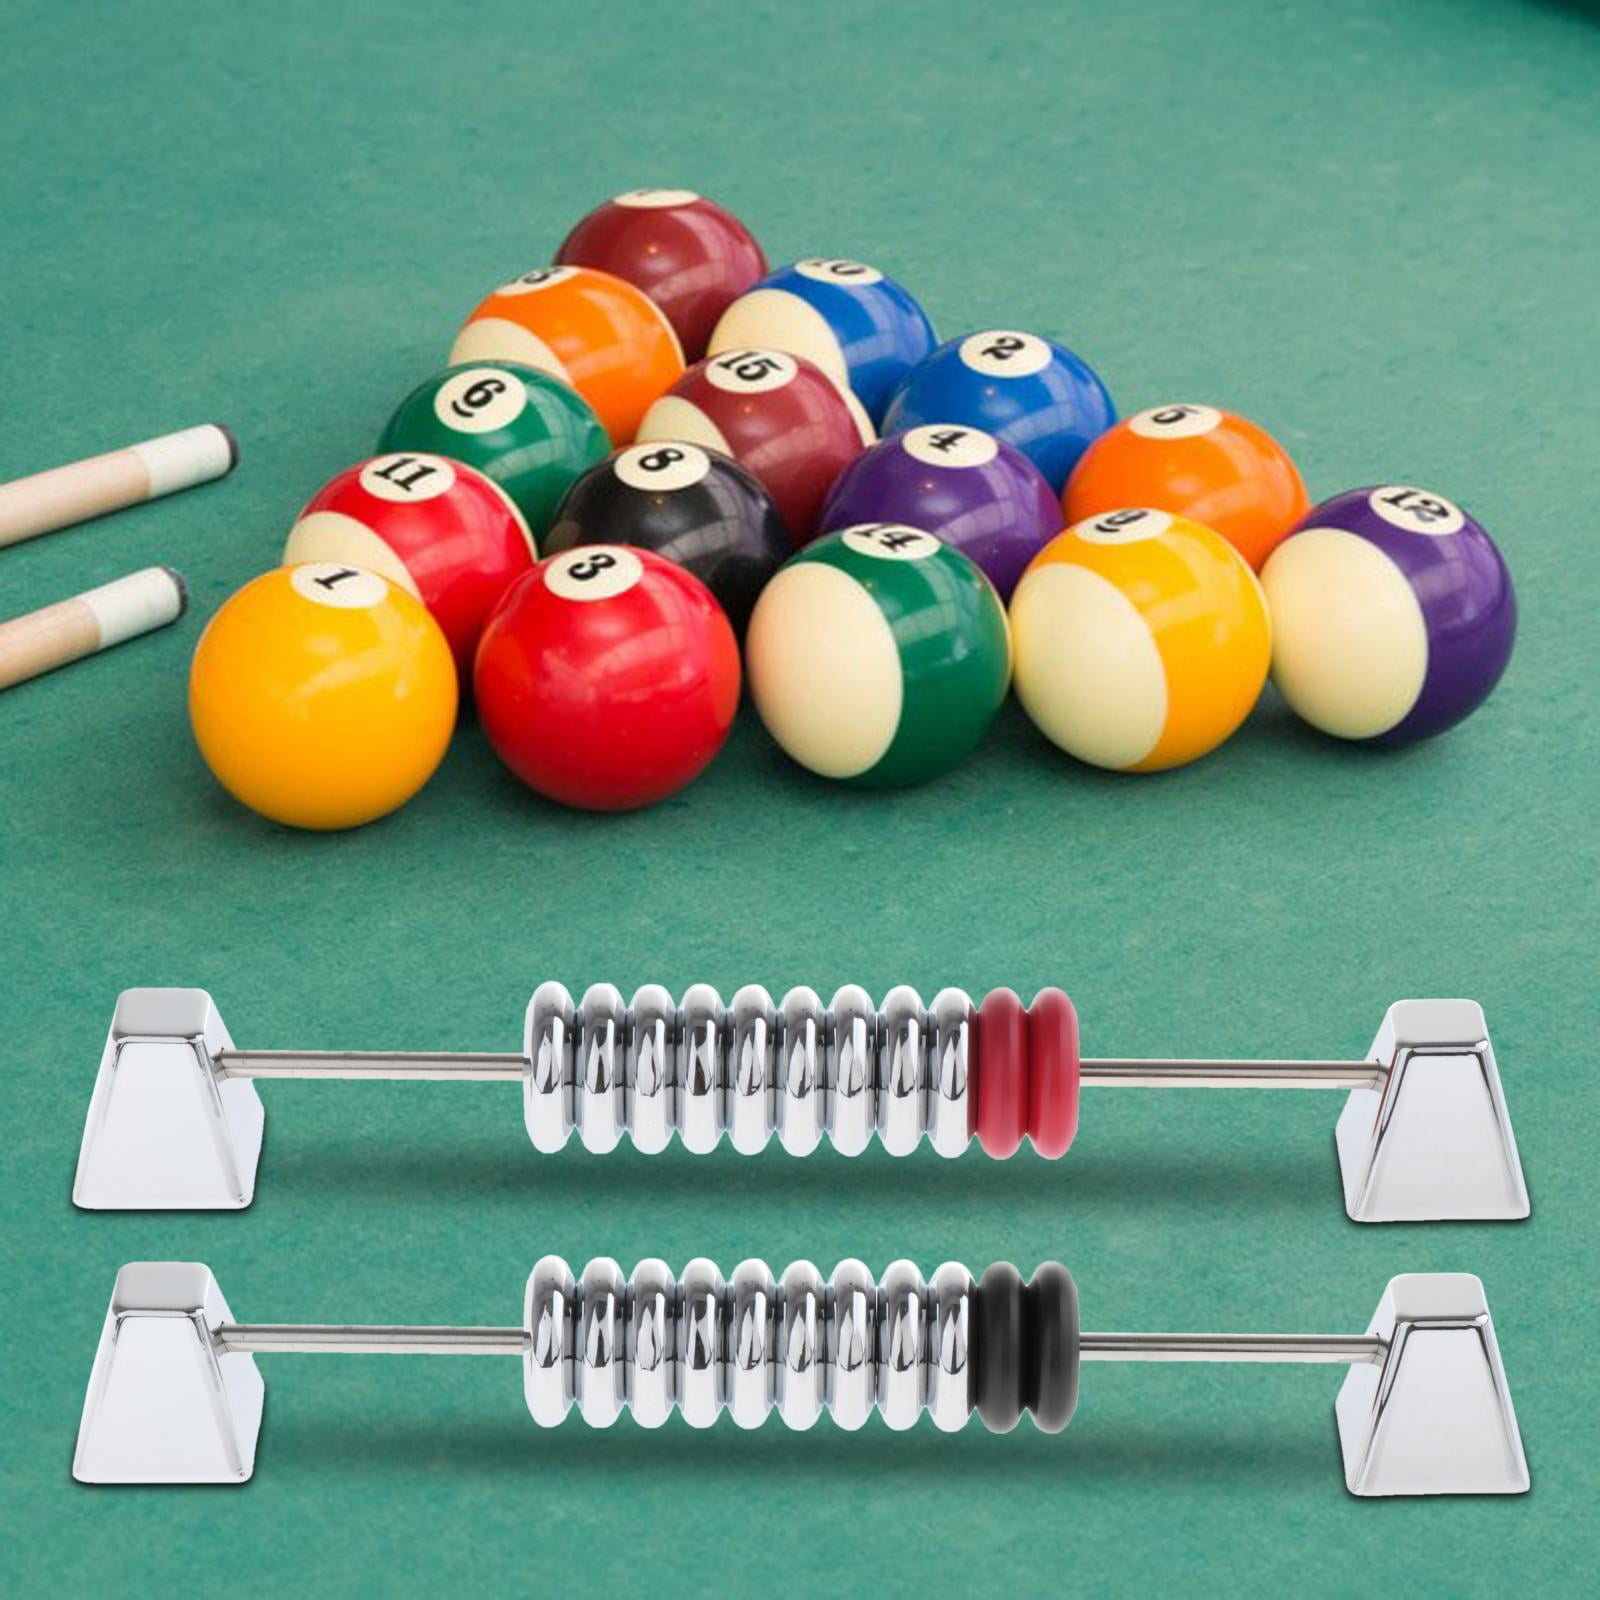 2x Shuffleboard Score Keeper Metal Abacus Score Style Devices Snooker Billiard Score Board for Tabletop Games Shuffleboard Tables Football